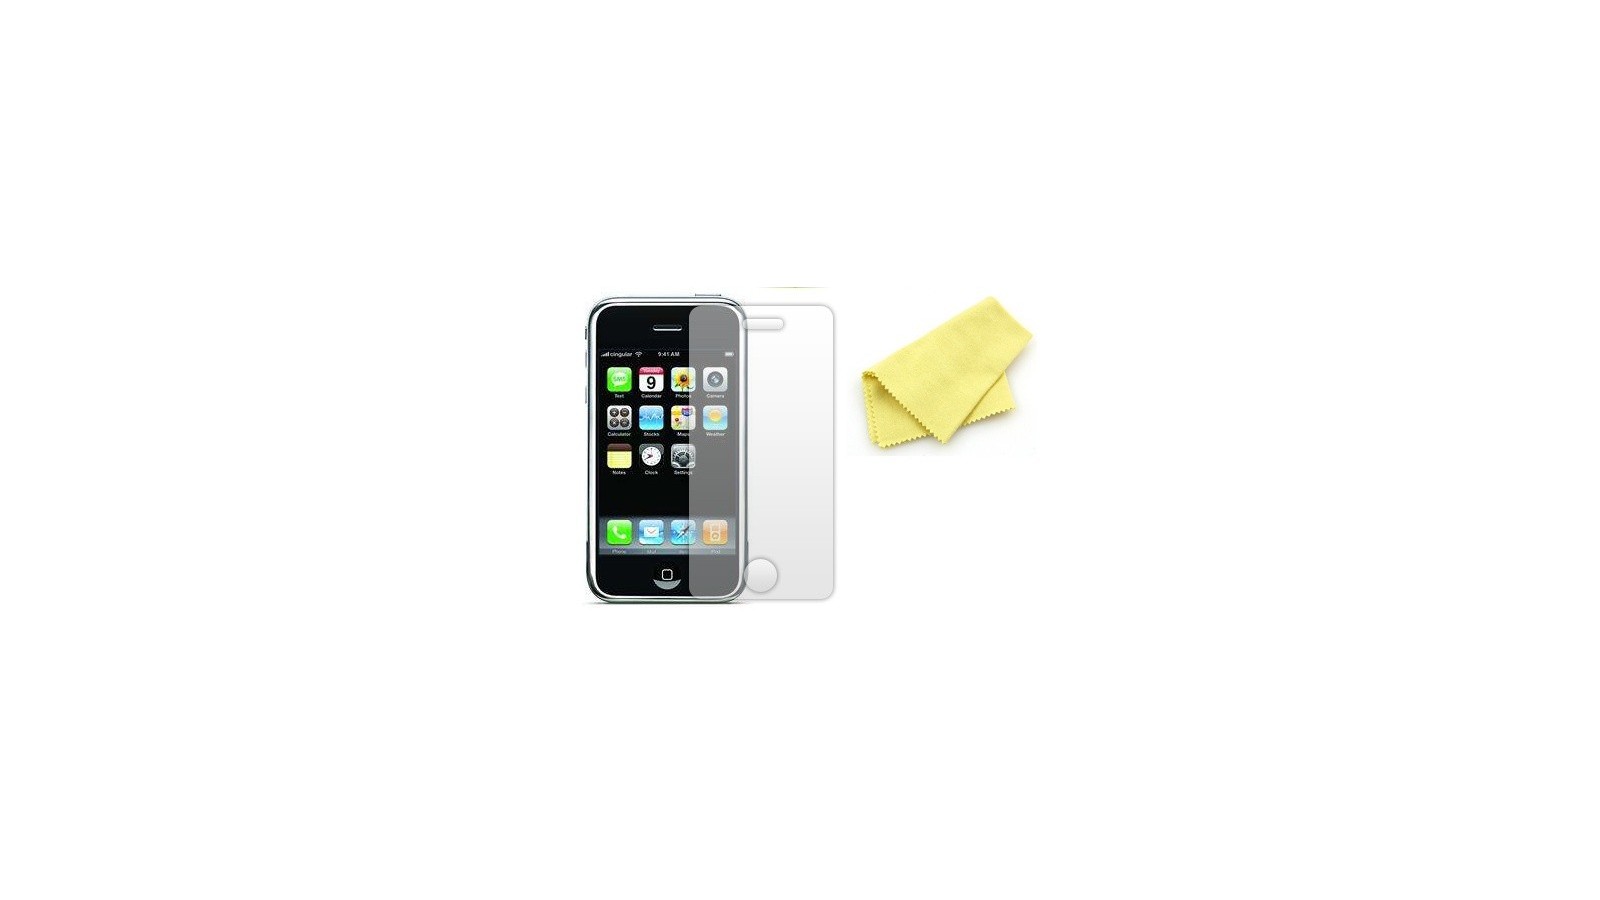 Pellicola protettiva per Apple iPhone 3GS + panno